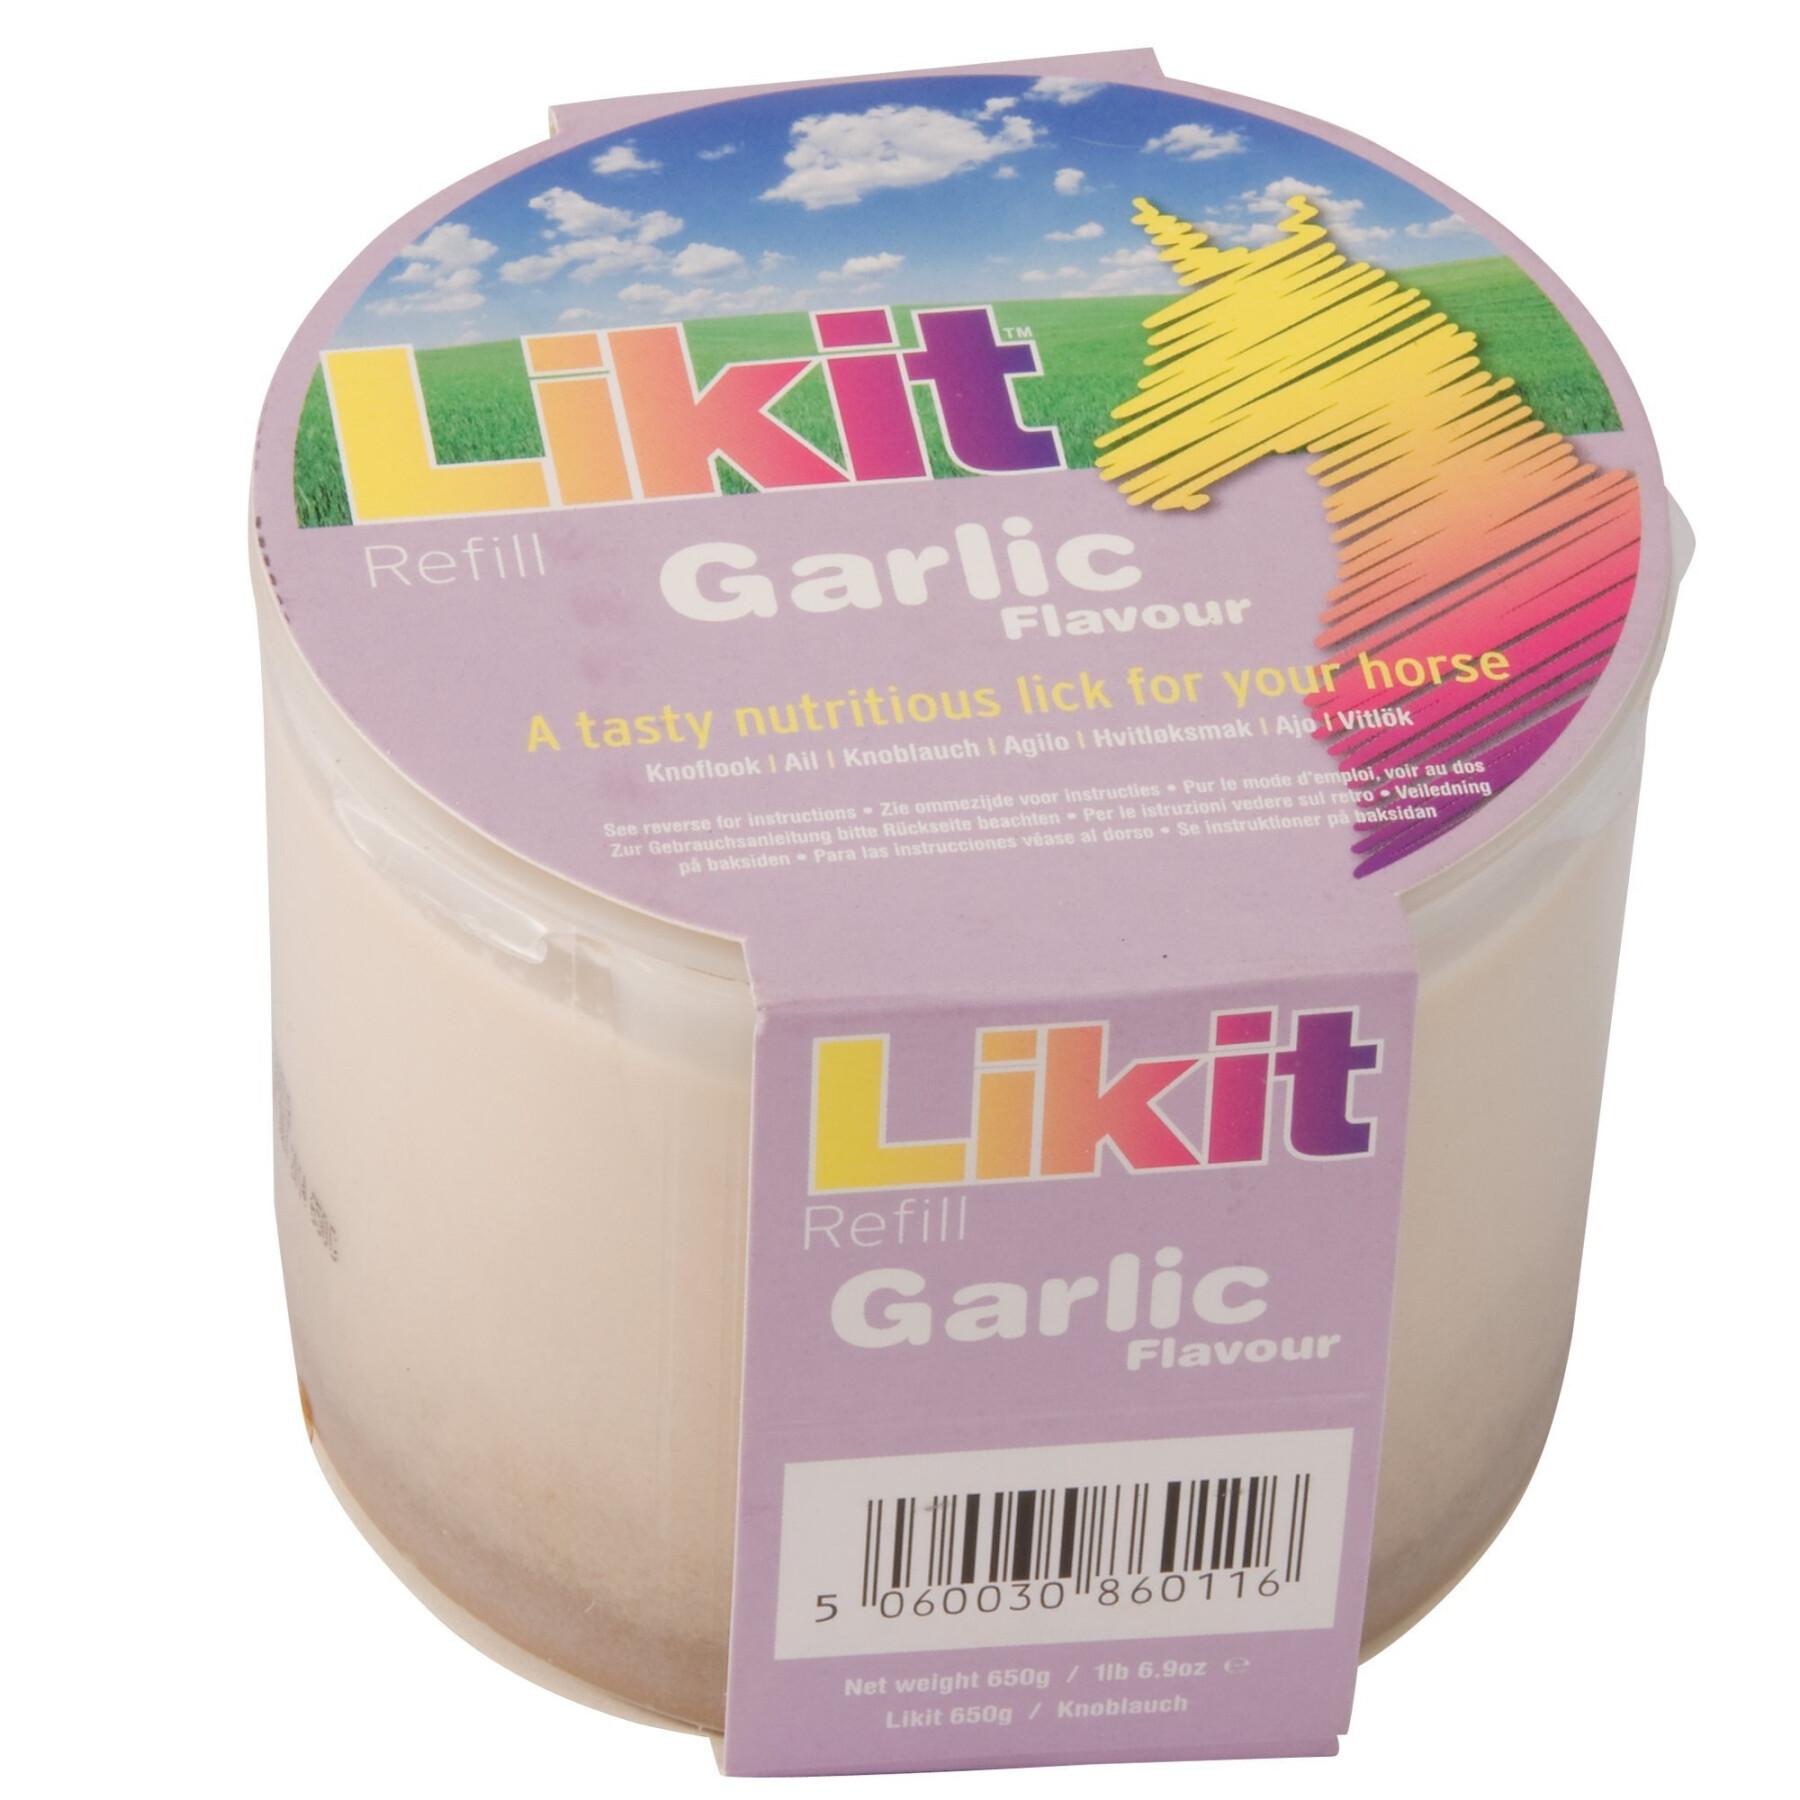 Garlic flavored treats LiKit